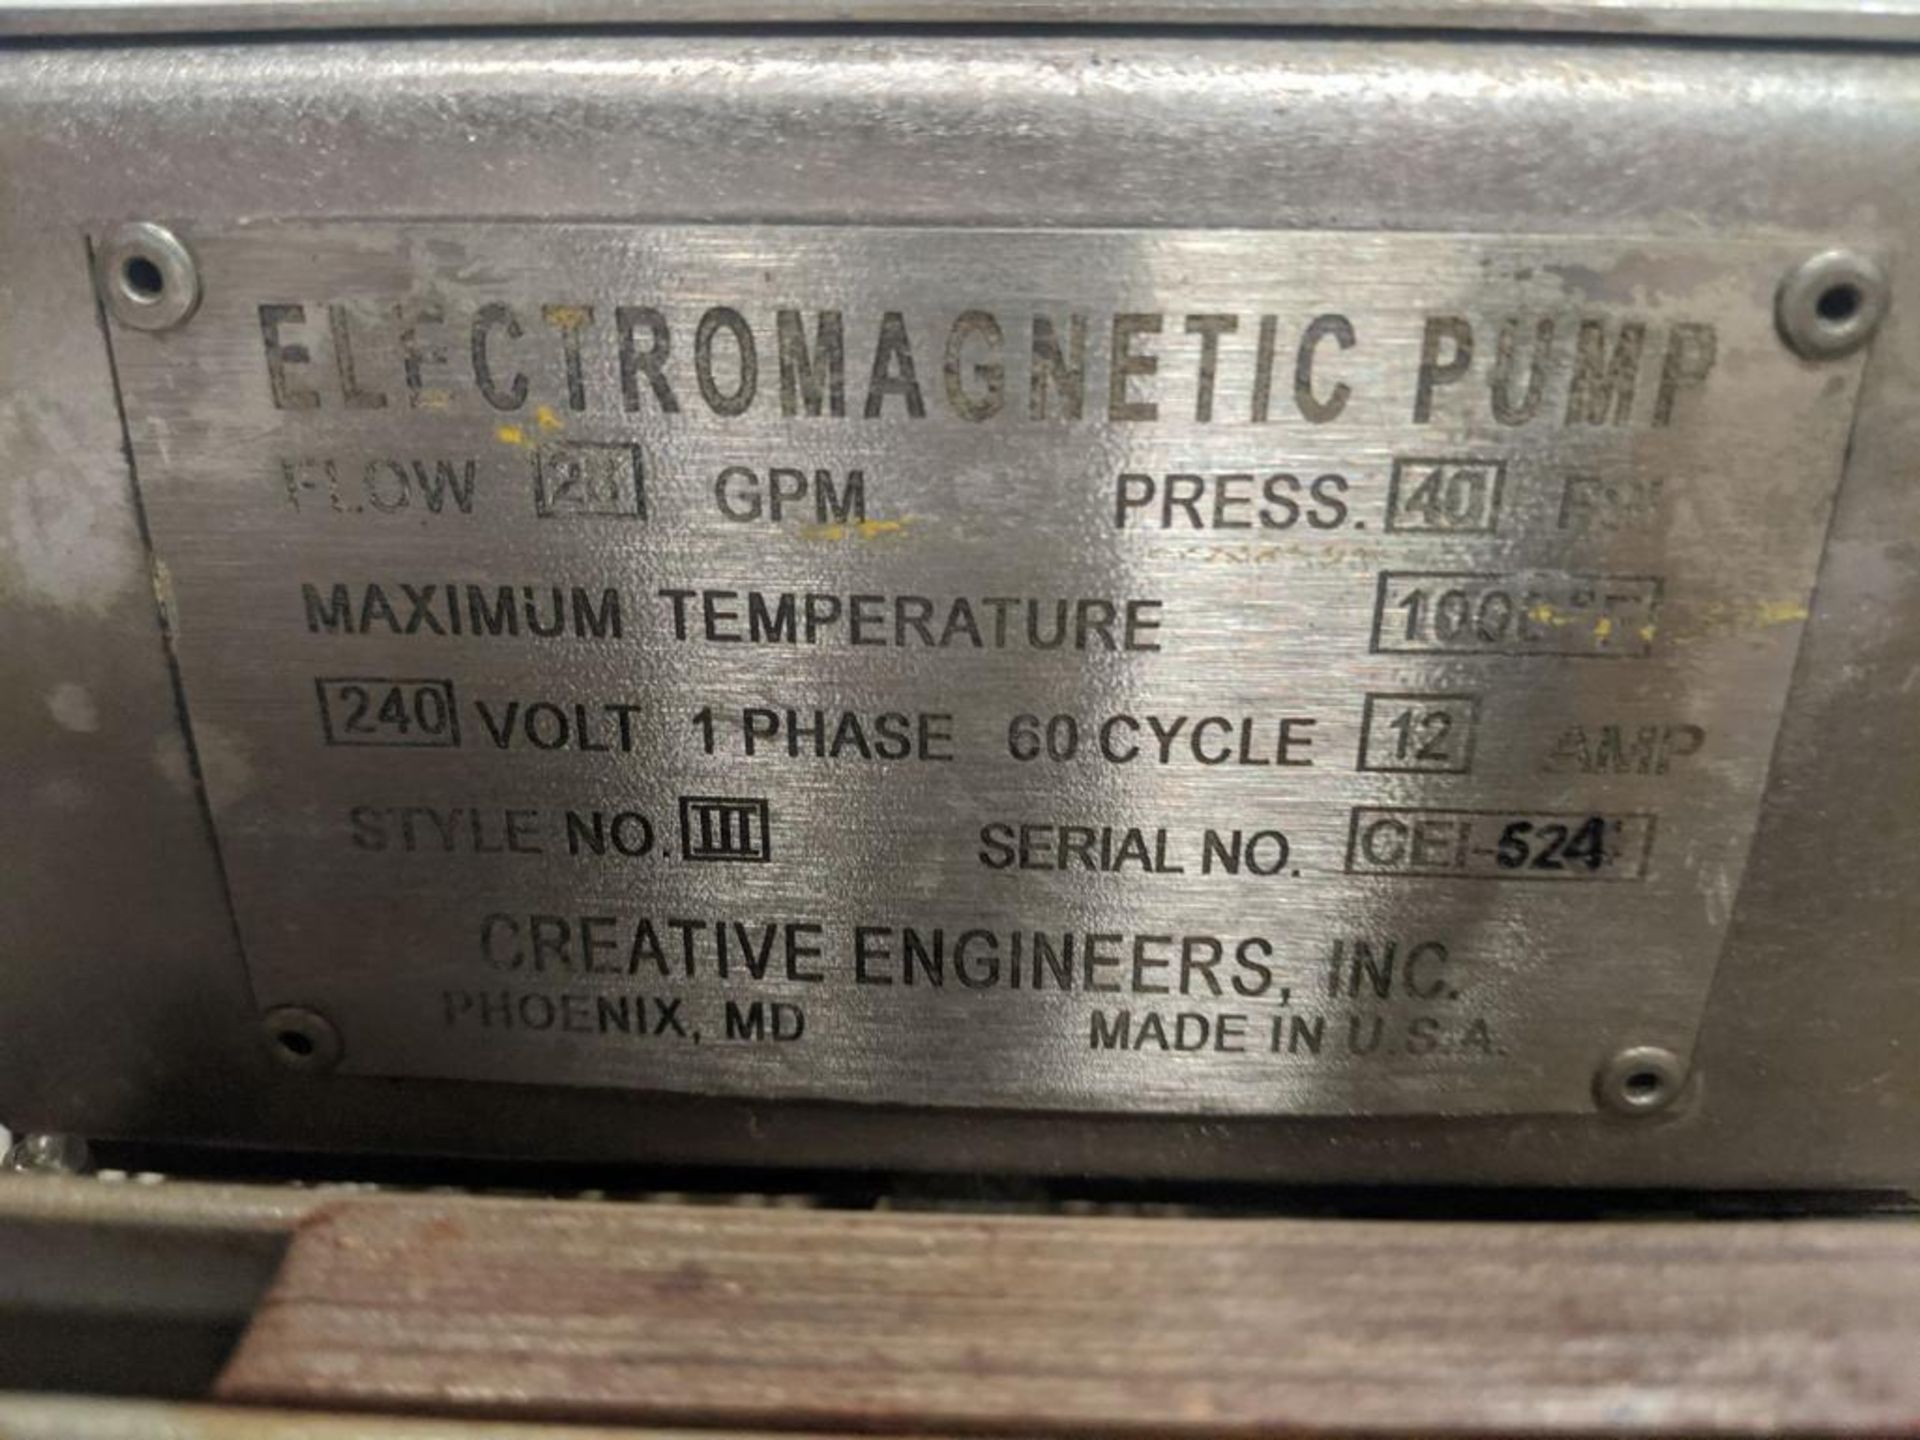 Creative Engineers Inc. Style No. III Electromagnetic Pump - Image 3 of 3